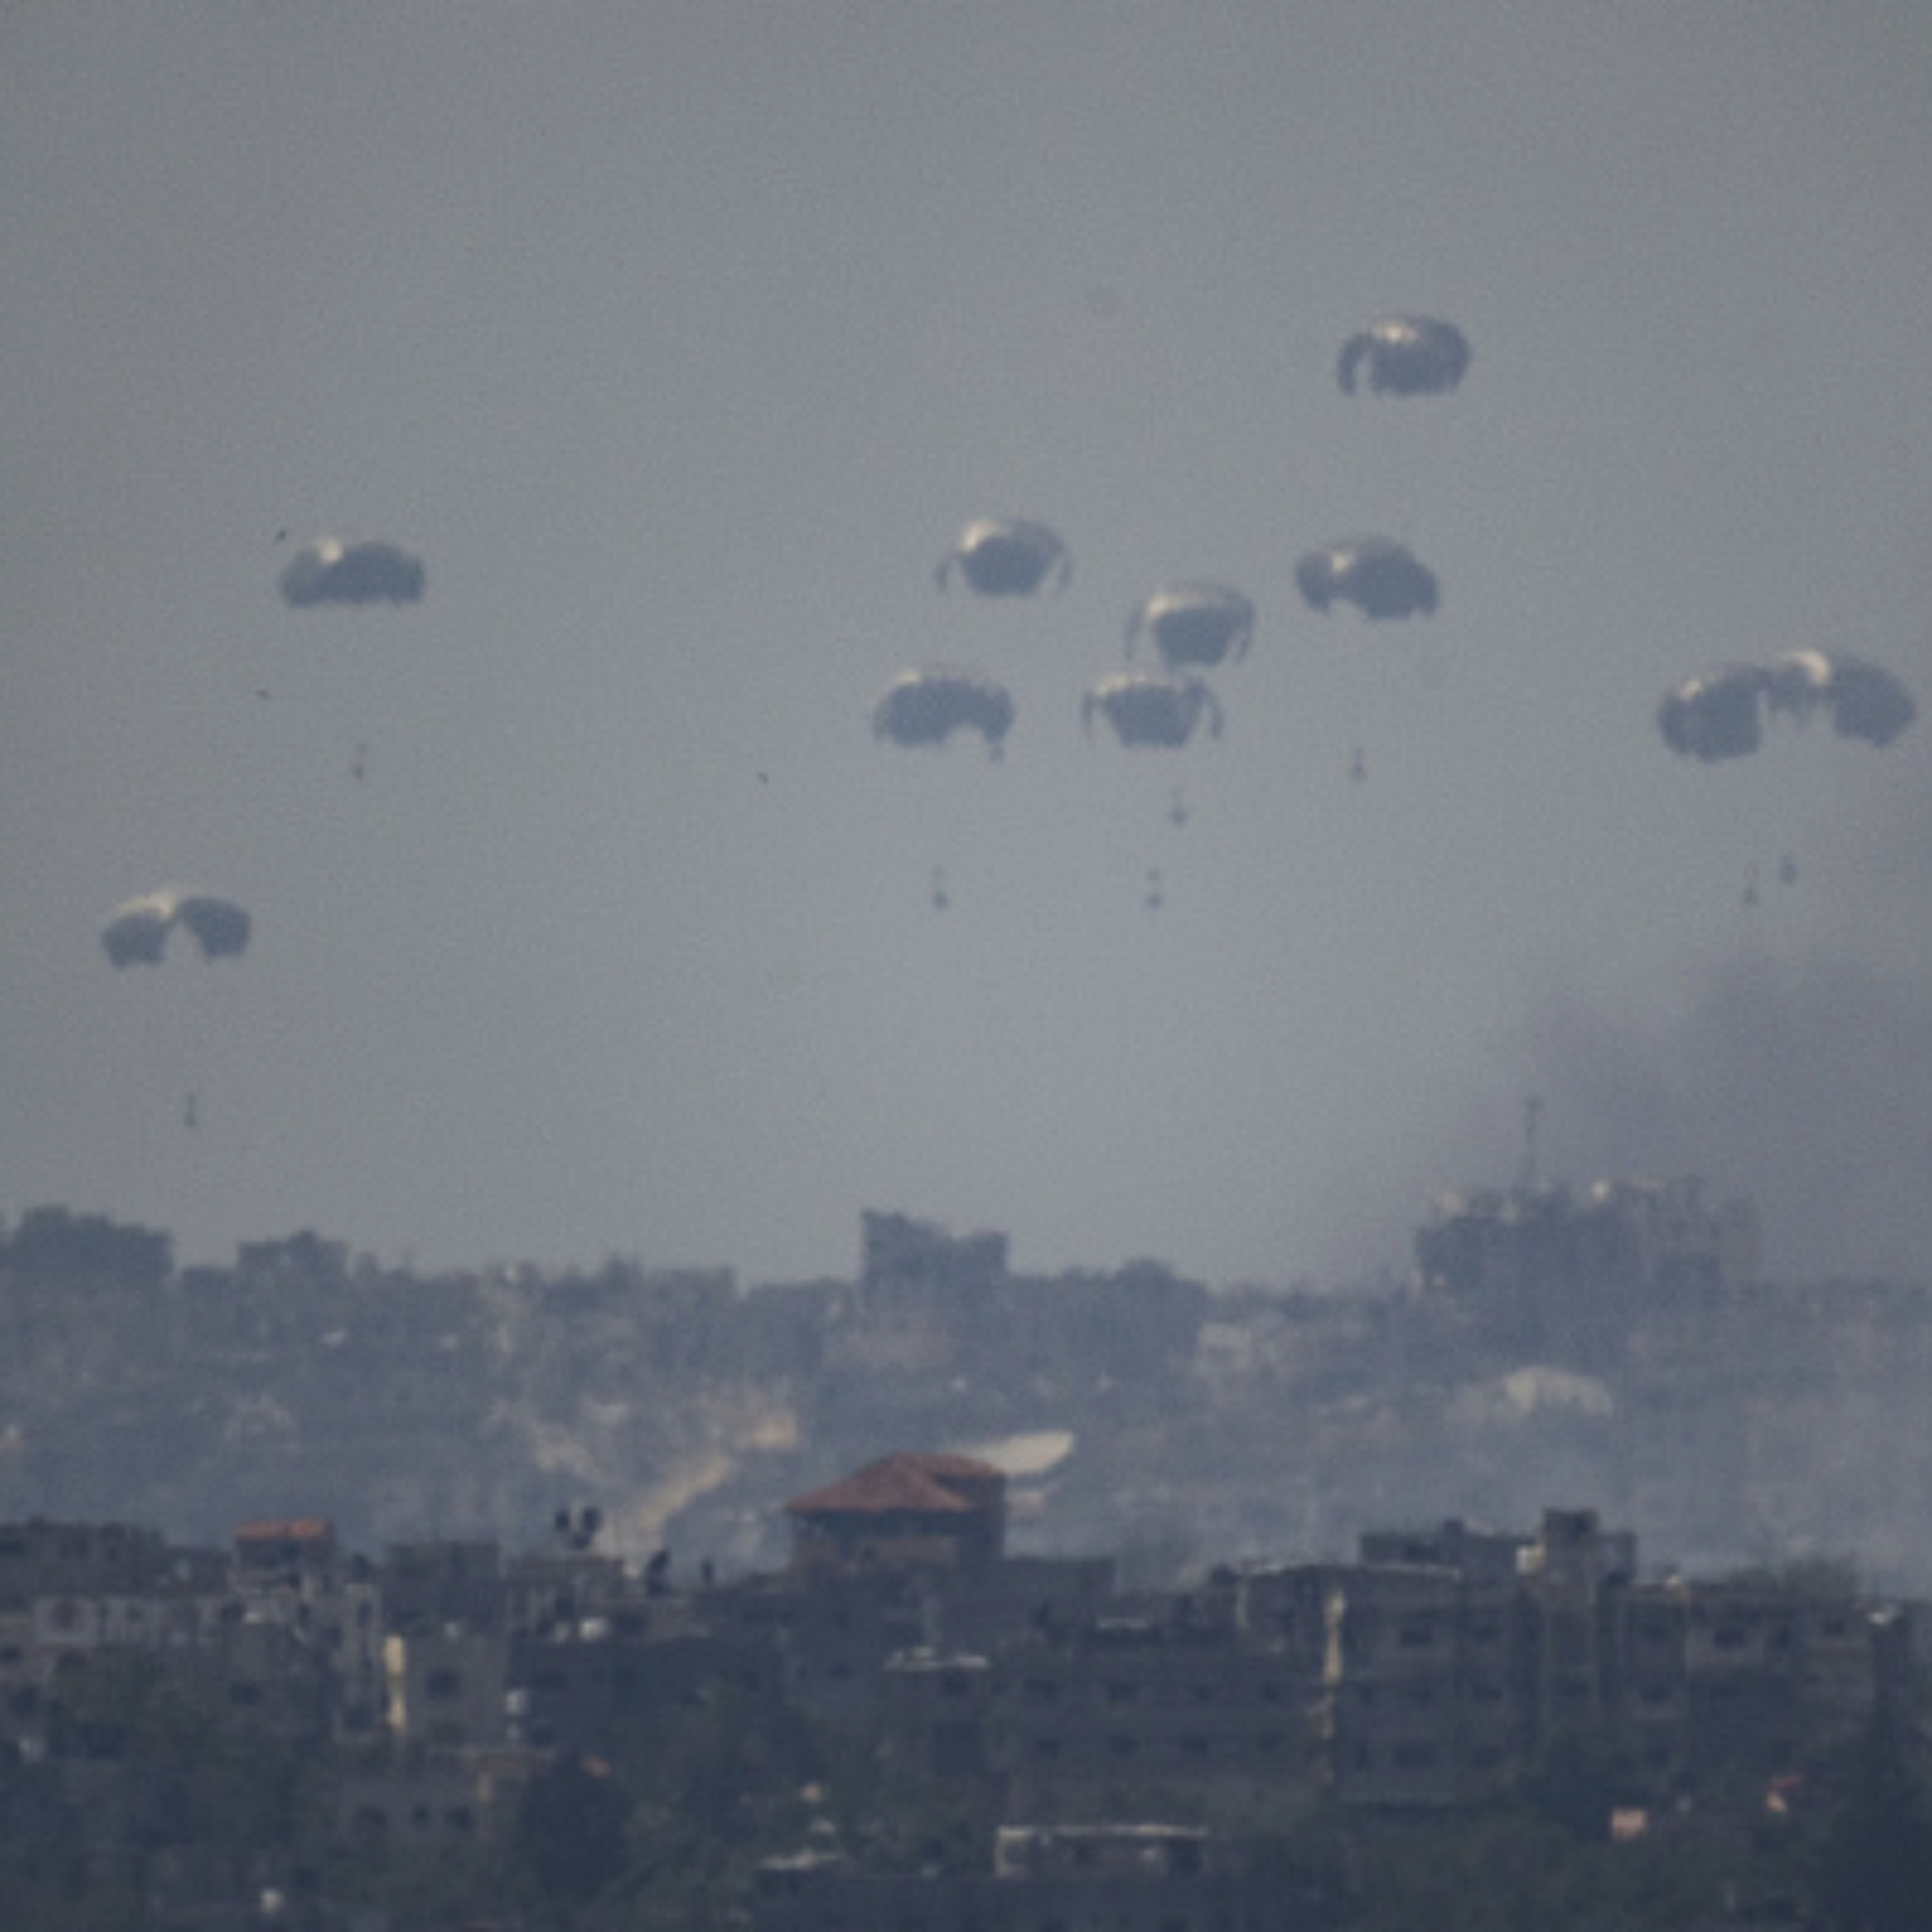 Israel-Turkiye tensions rise over aid to Gaza